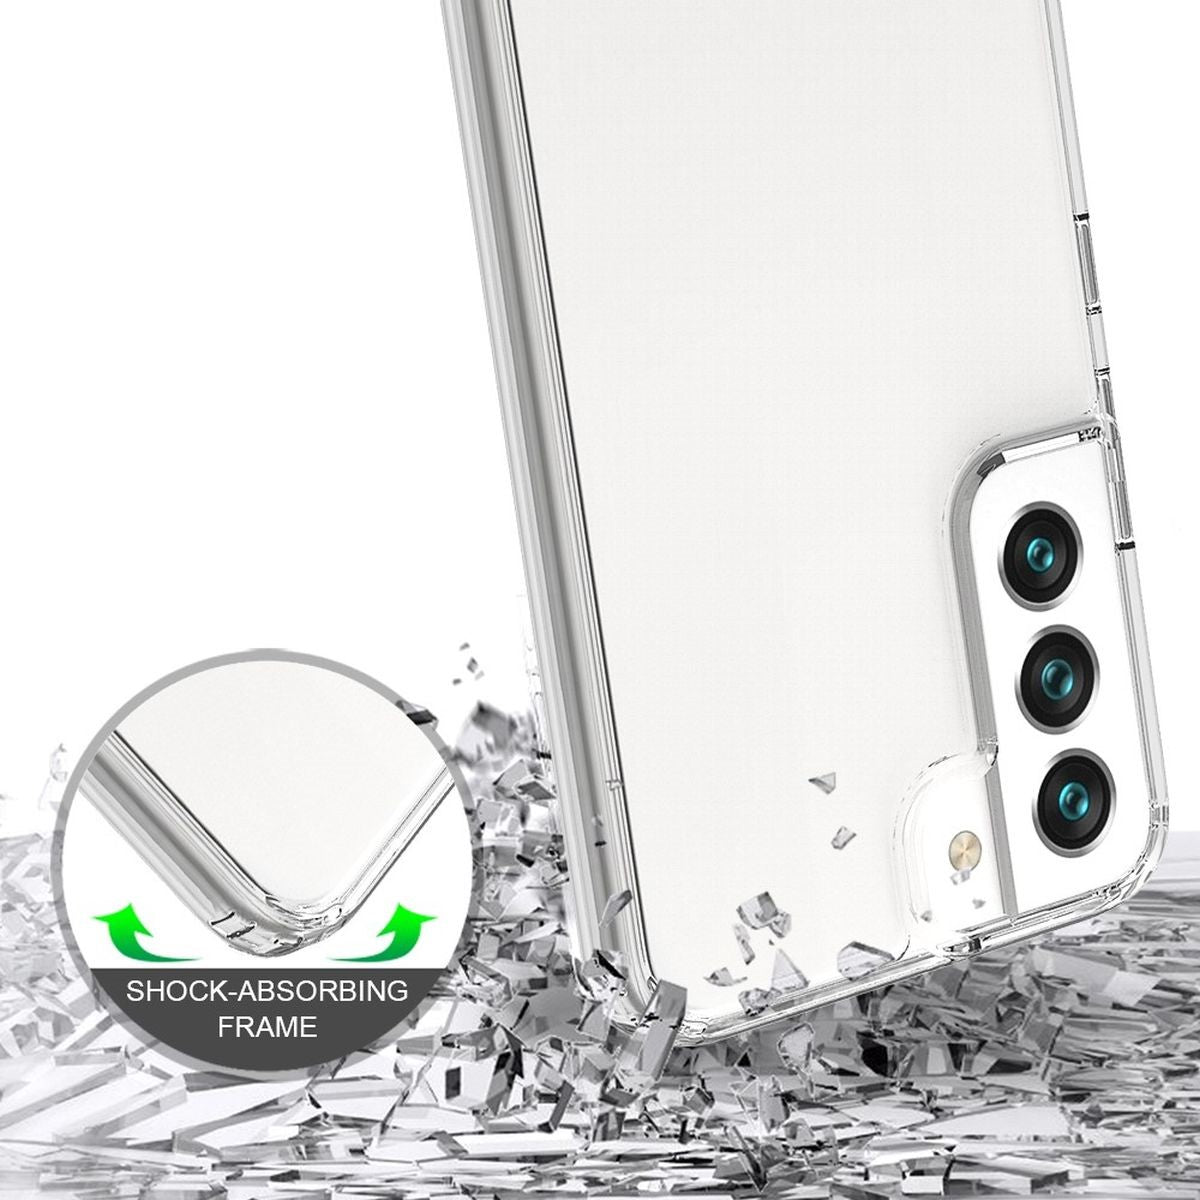 Hülle für Samsung Galaxy S22 Handyhülle Hybrid Silikon Case Bumper Cover Klar